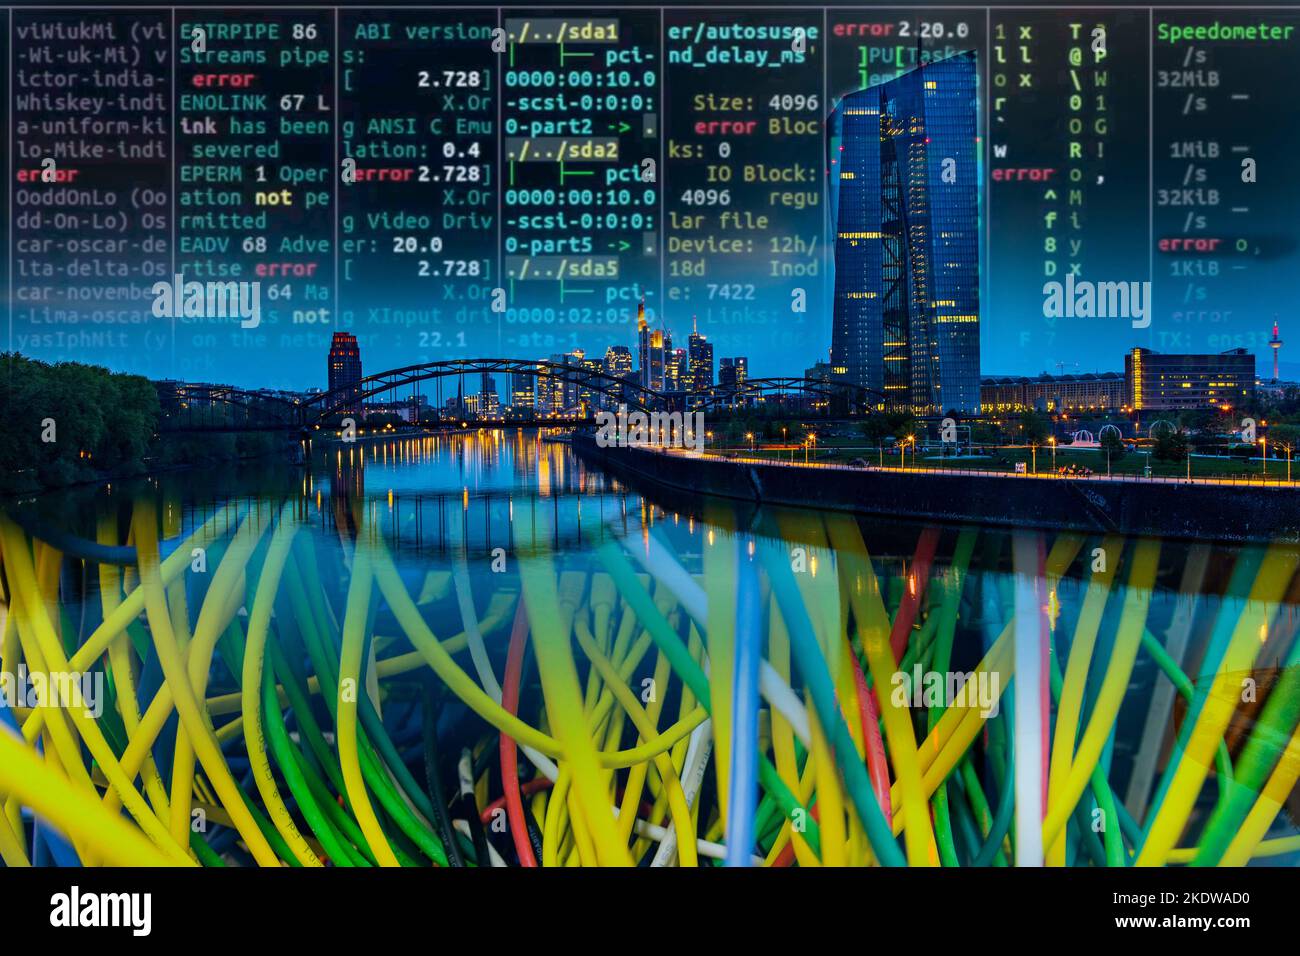 Symbolic image Critical infrastructure, Frankfurt am Main skyline, data cable, hacker code, Stock Photo